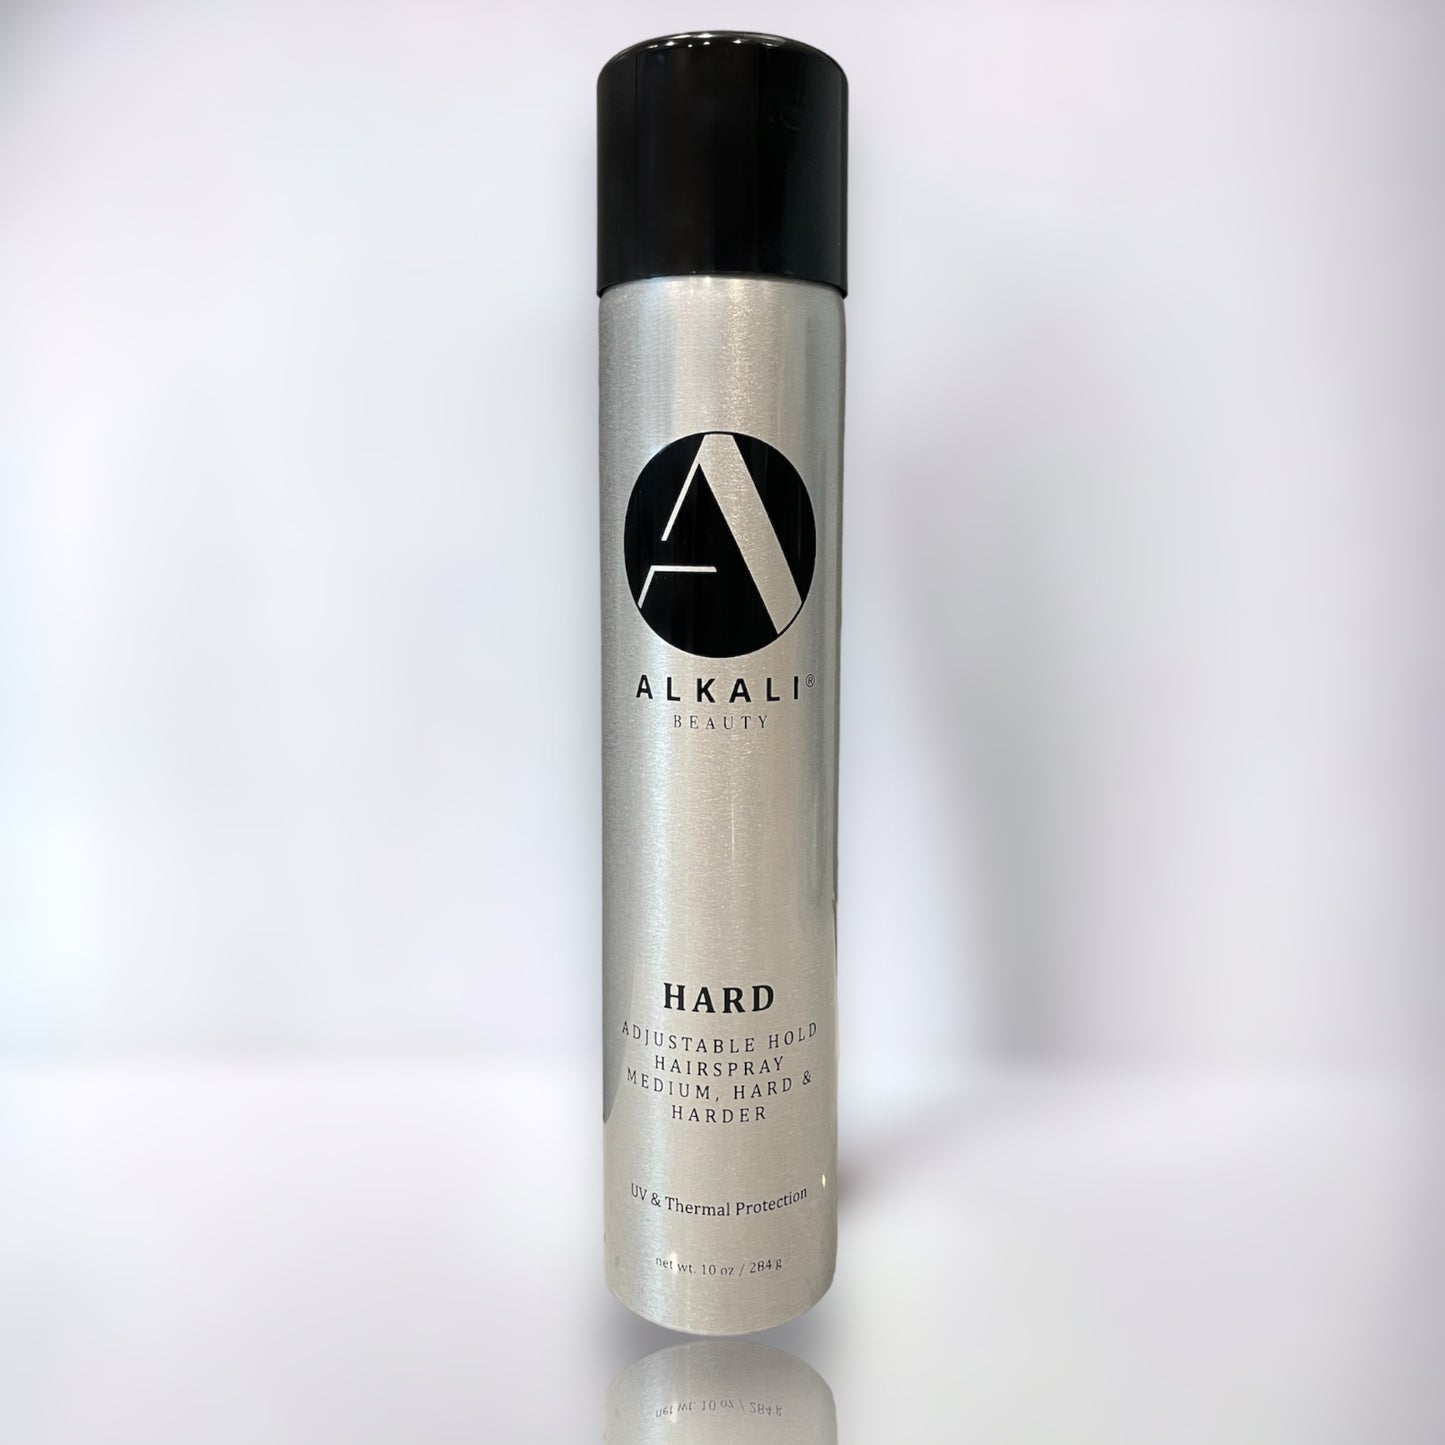 Hard - Adjustable Hold Hairspray de